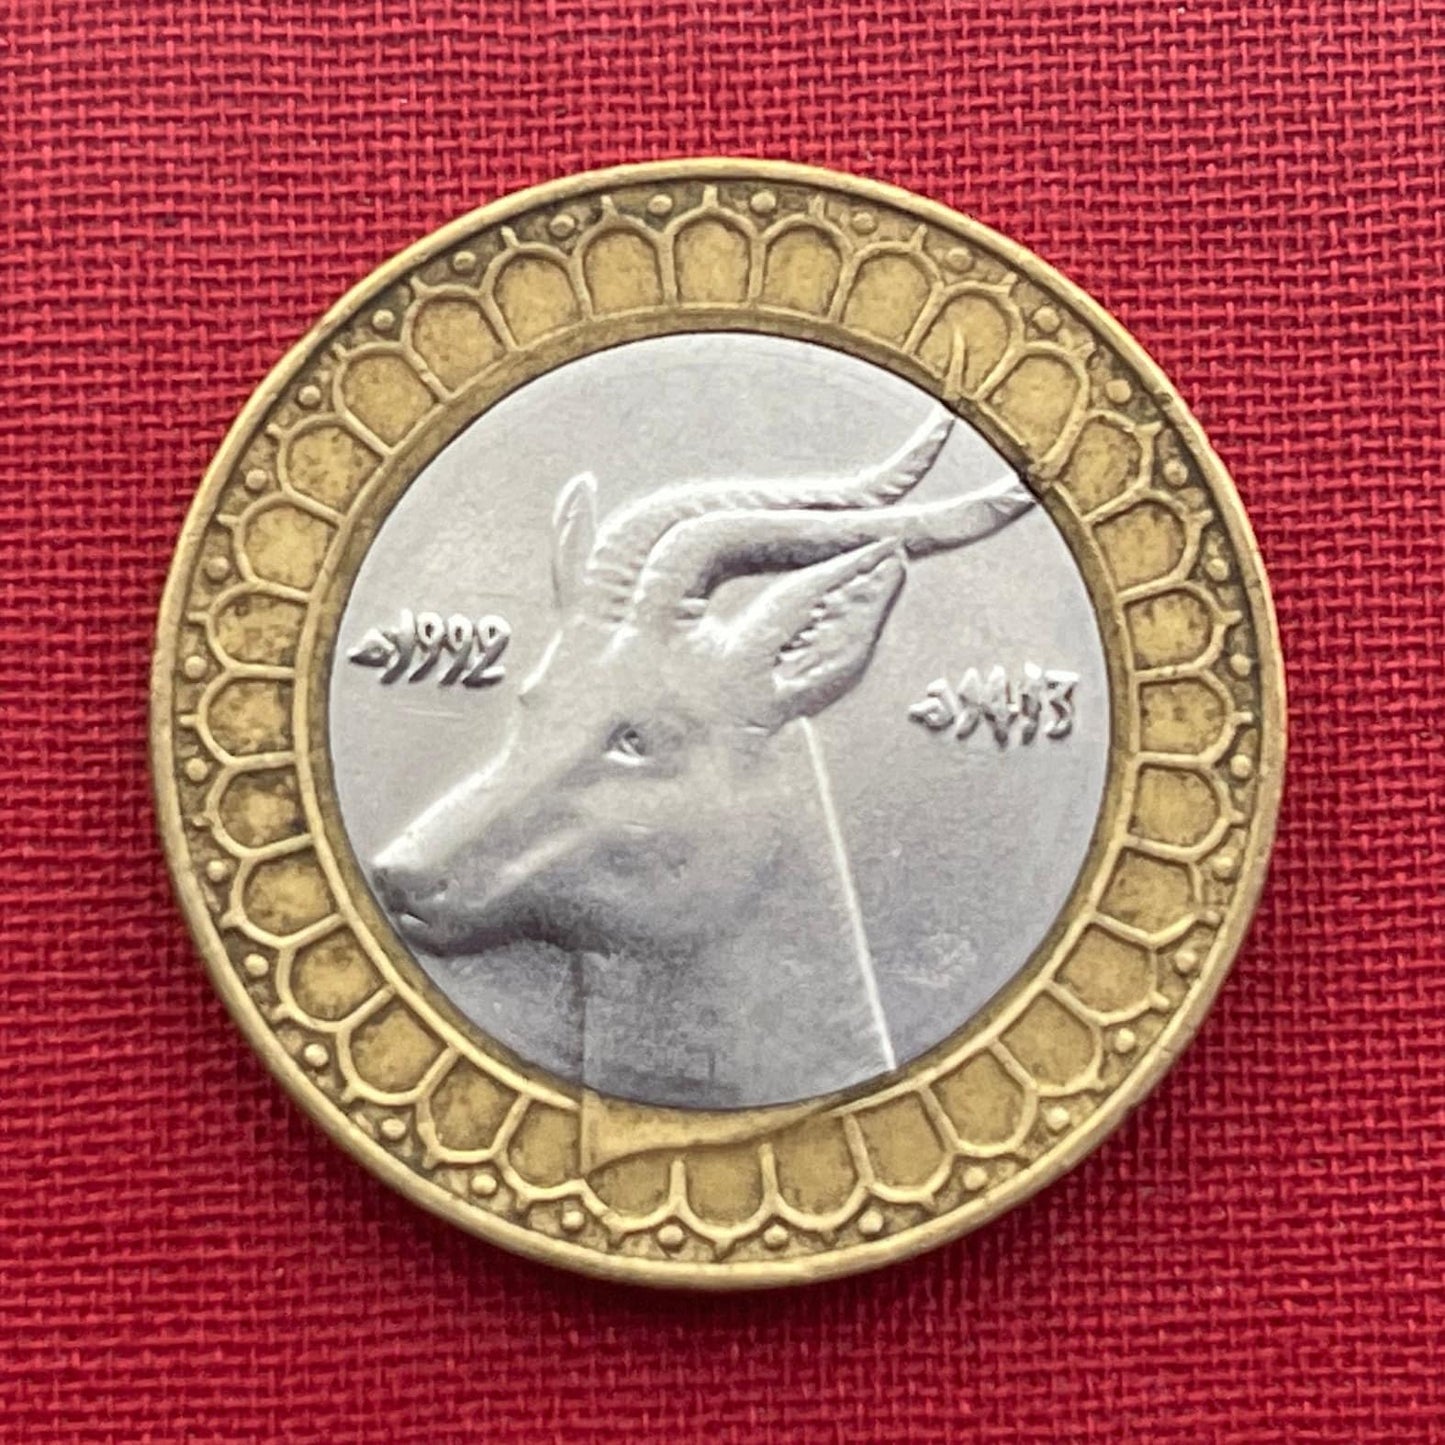 Dama Gazelle 50 Dinars Algeria Authentic Coin Money for Jewelry and Craft Making (Addra Gazelle) or (Mhorr gazelle) (Ménas) (Bimetallic) VF